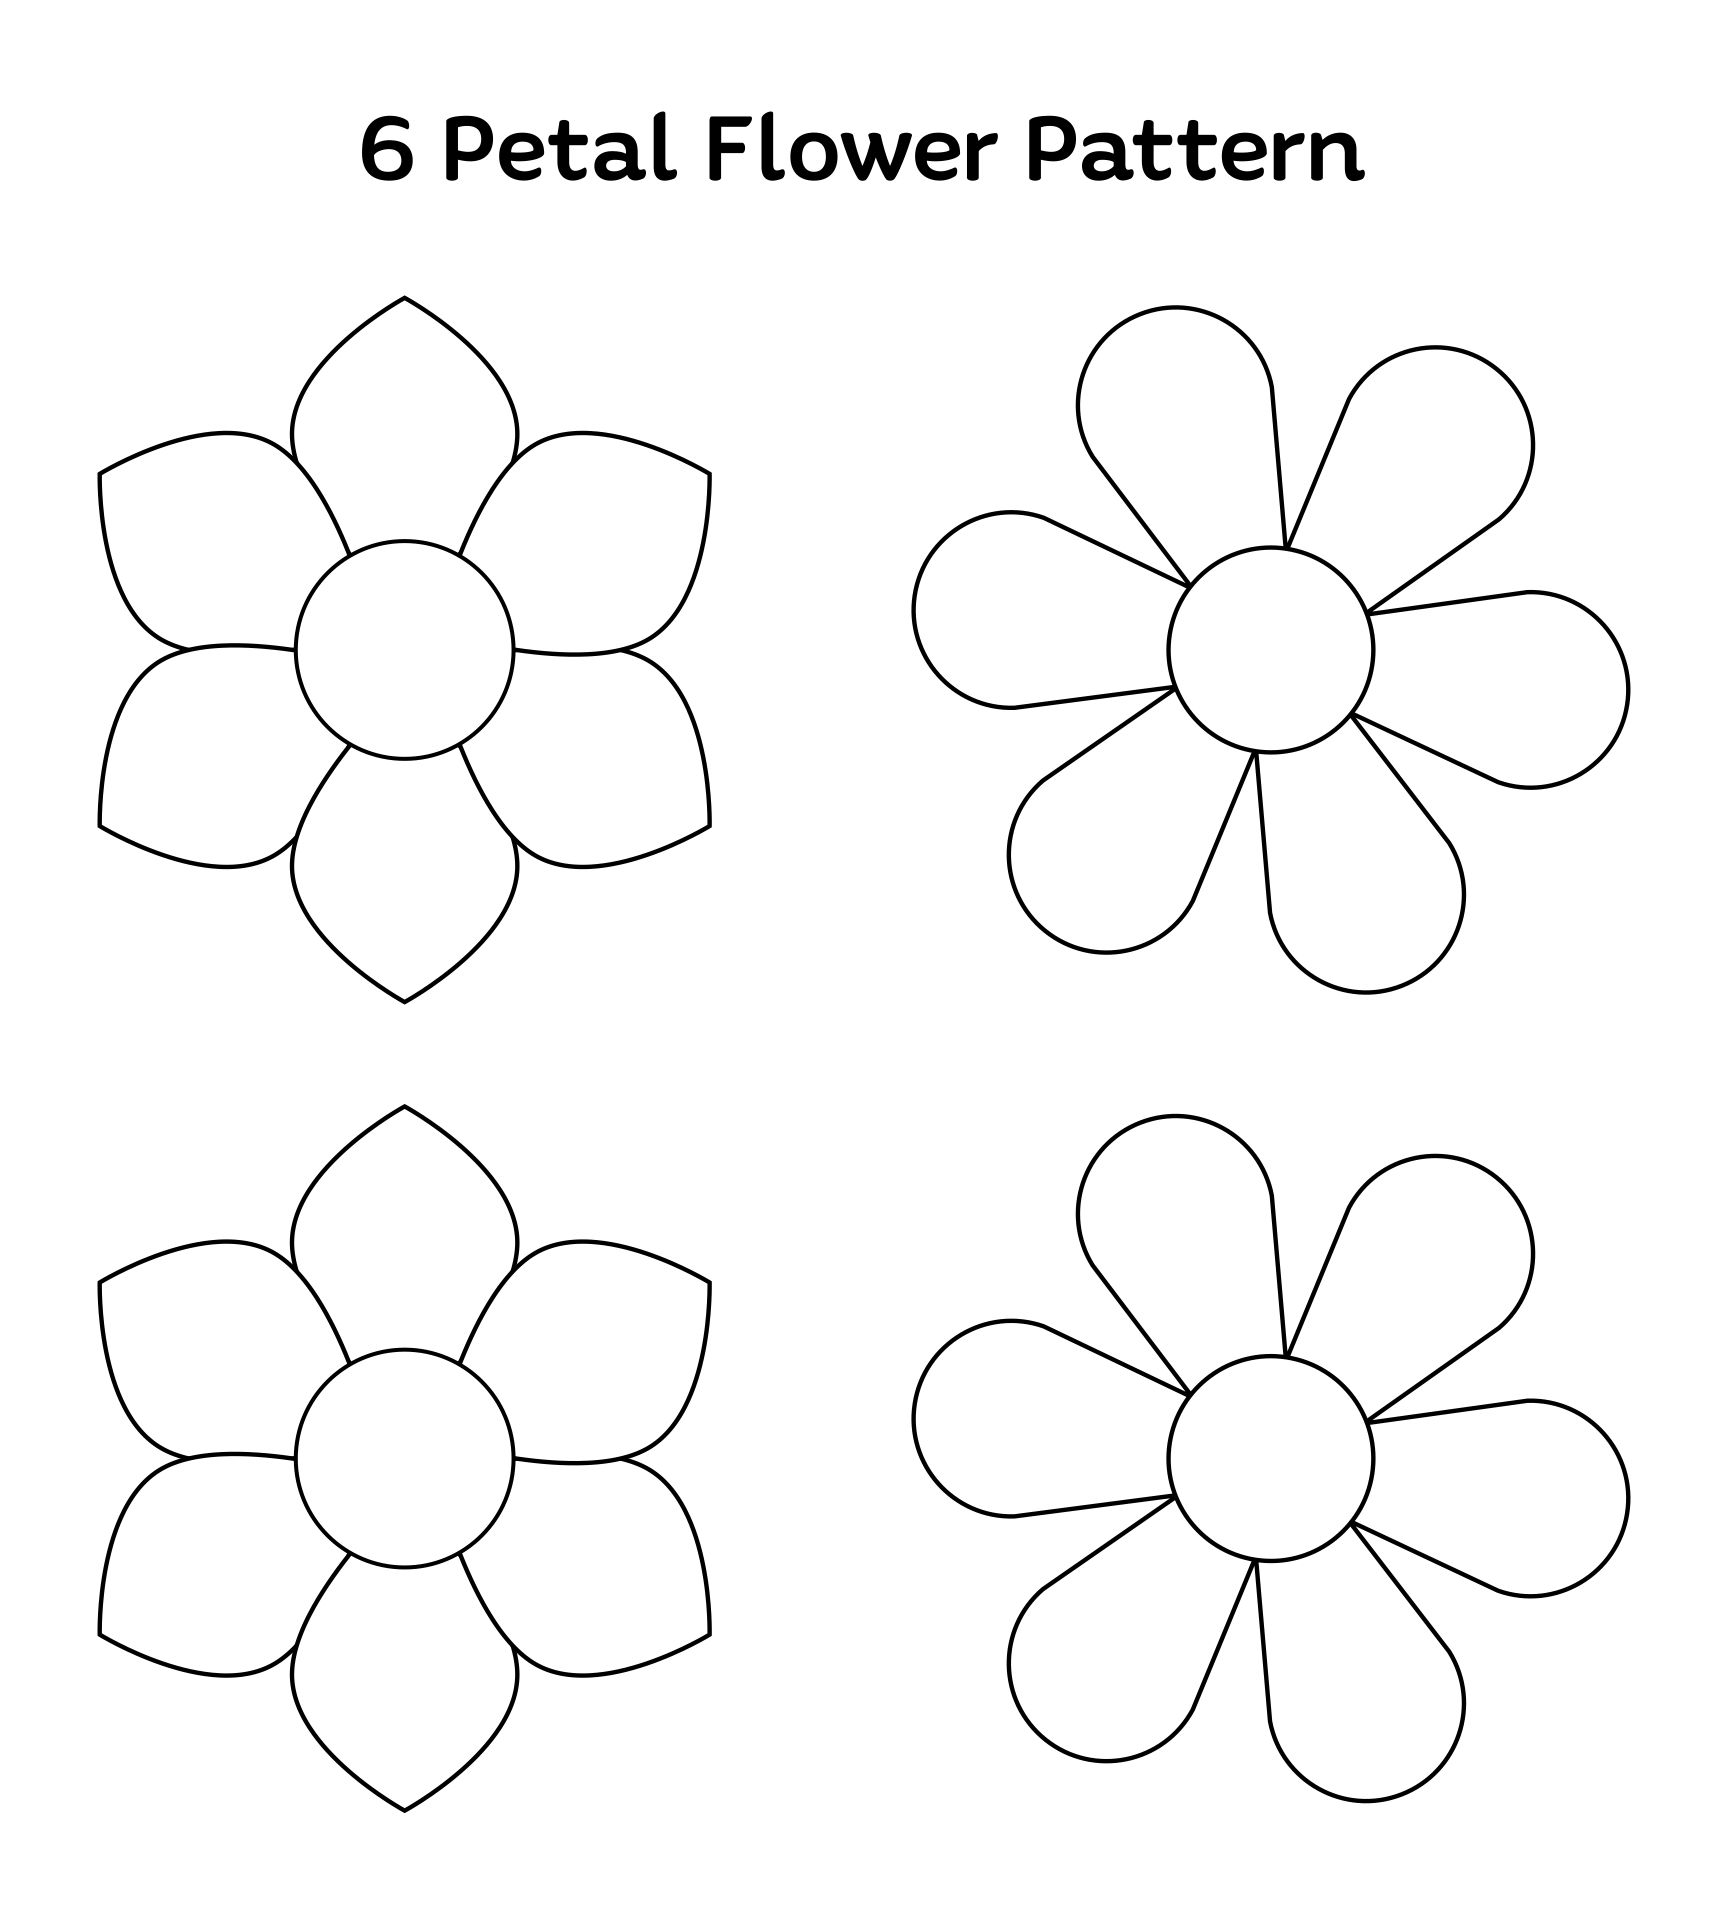 How to Make Six Petal Flower  Free Printable Papercraft Templates